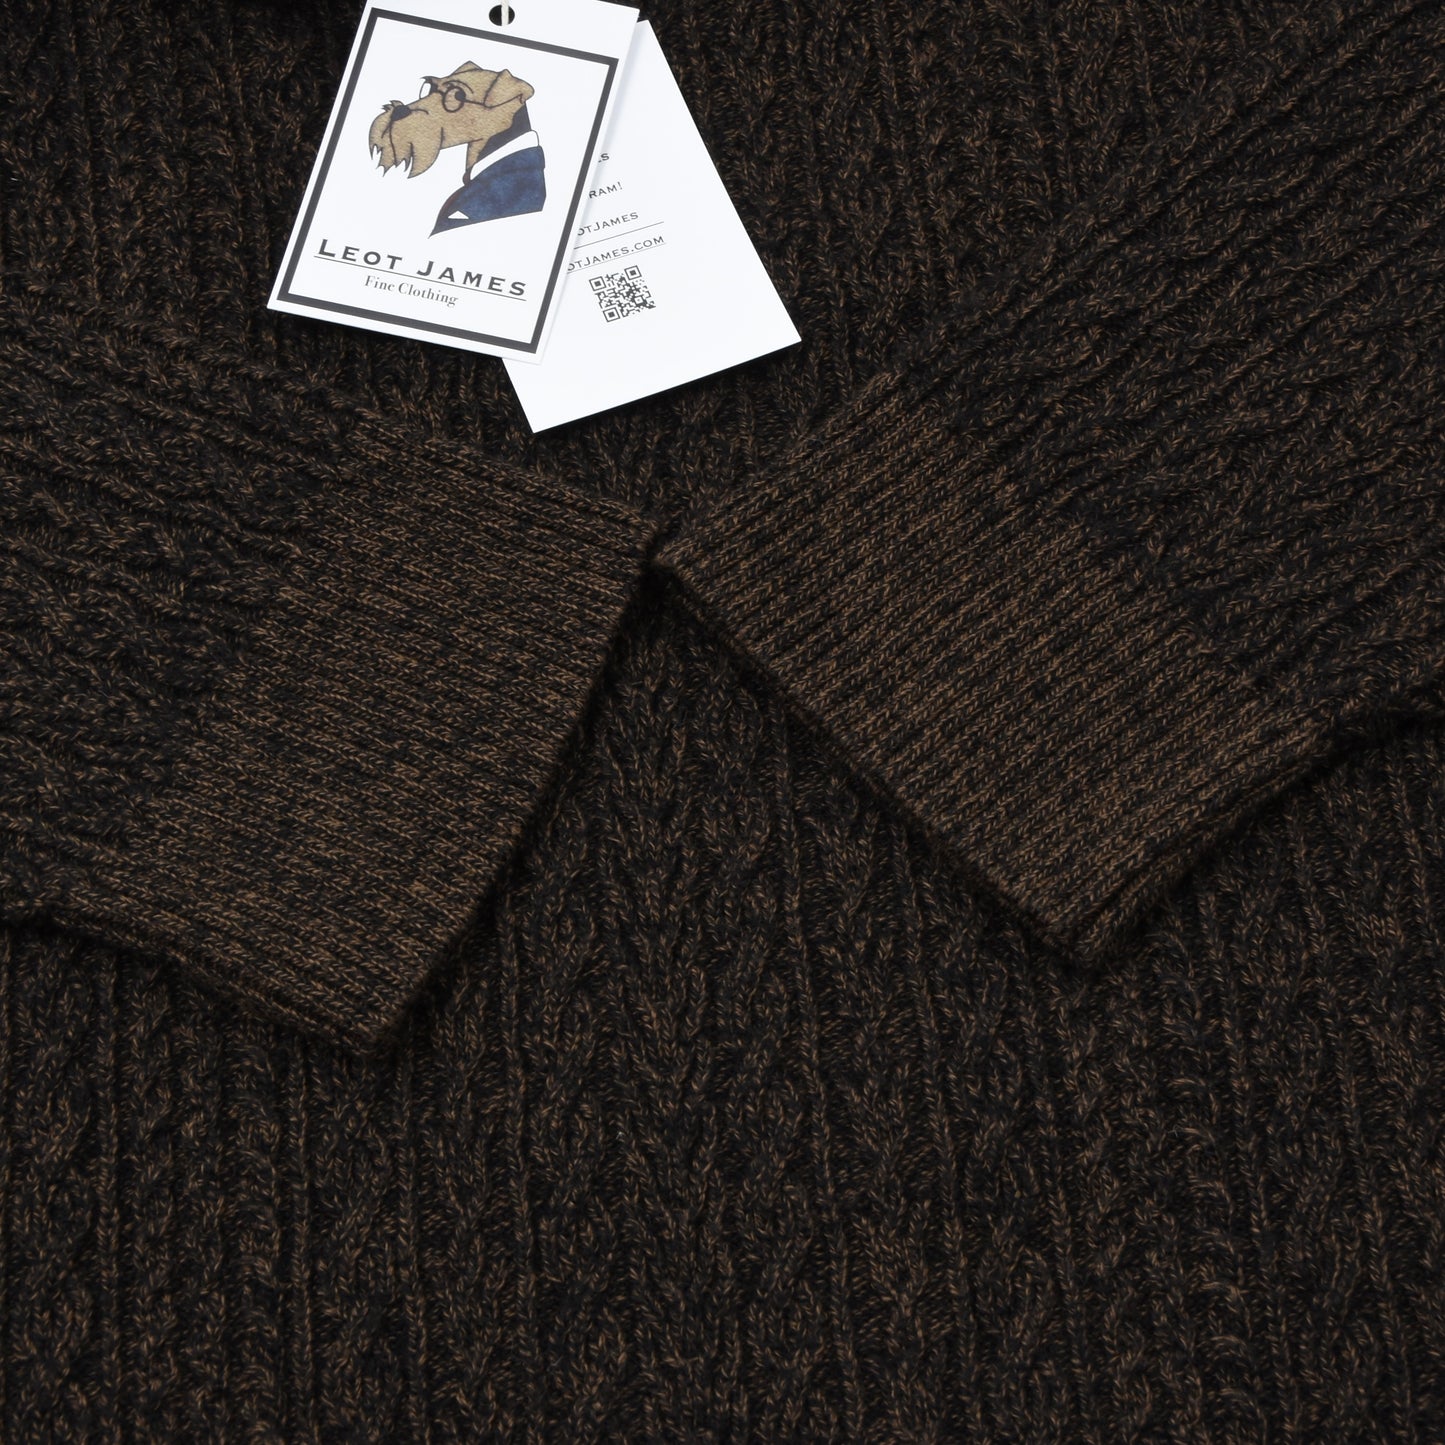 Gössl Wool-Cotton Cableknit Sweater Size 56 - Brown